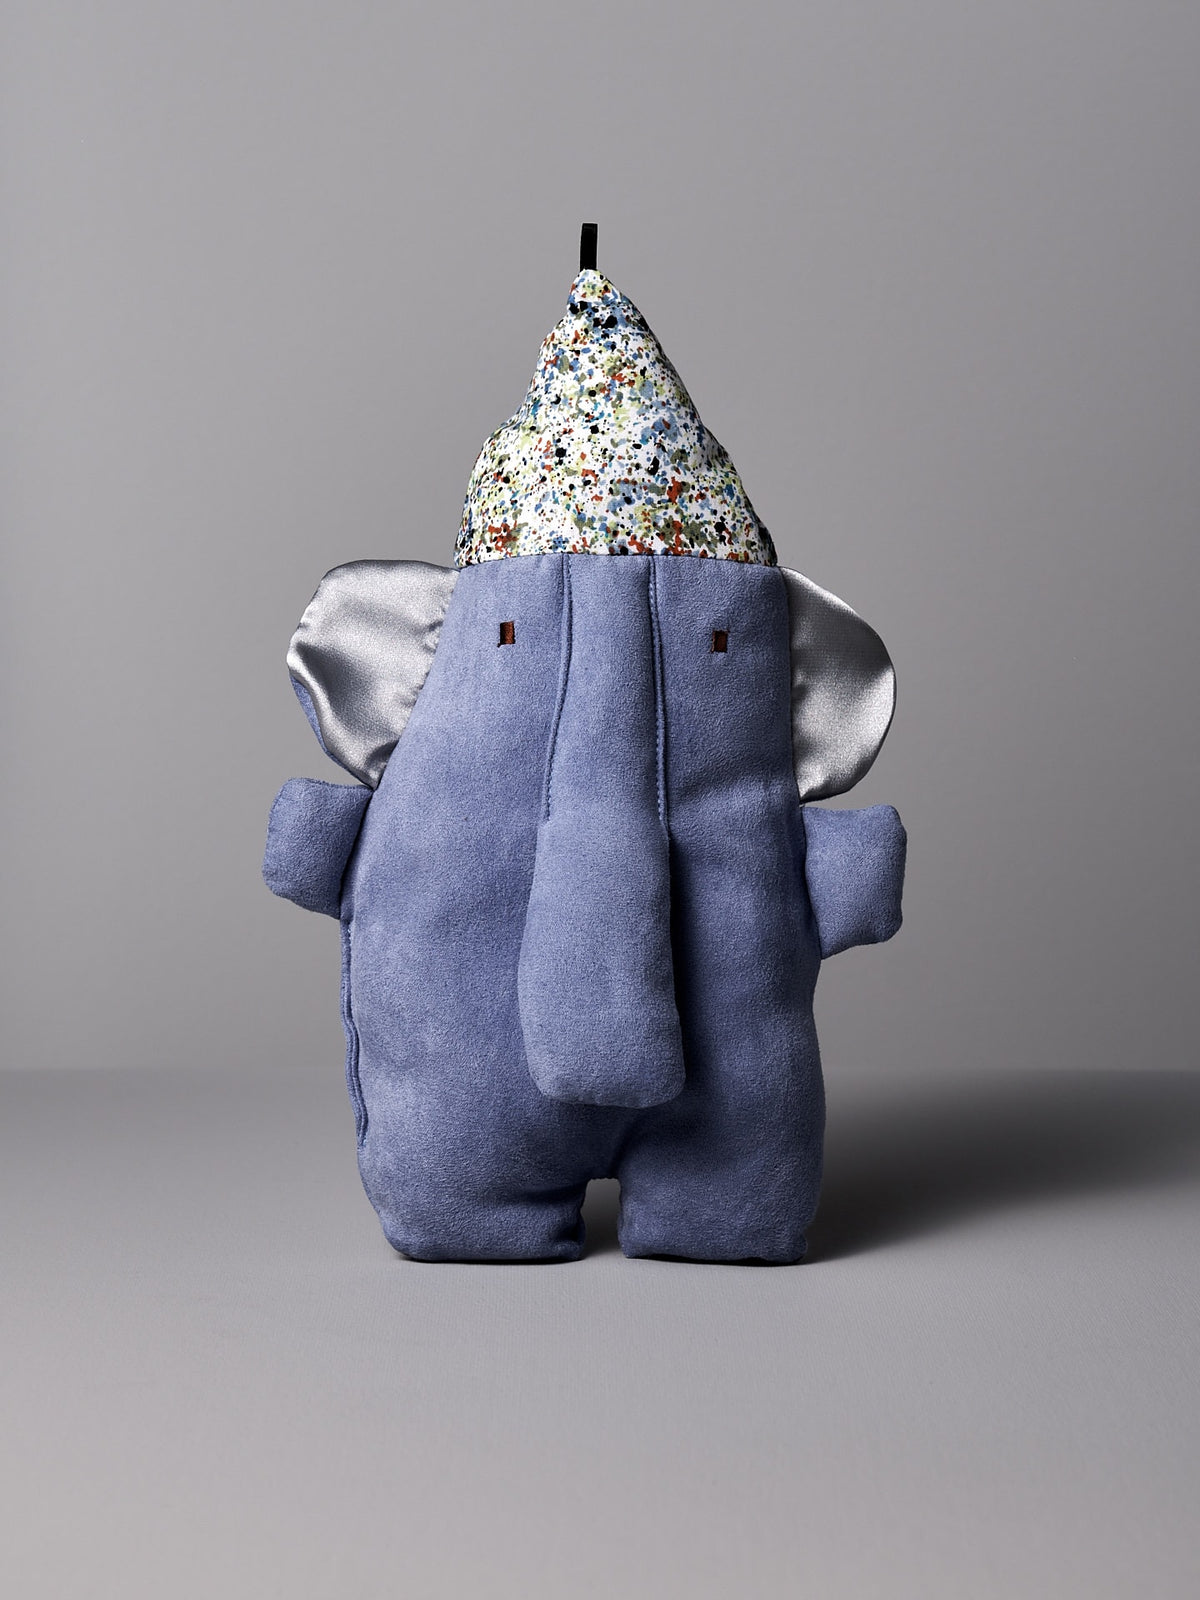 A Édith L&#39;Élephant stuffed animal with a confetti hat by Raplapla.